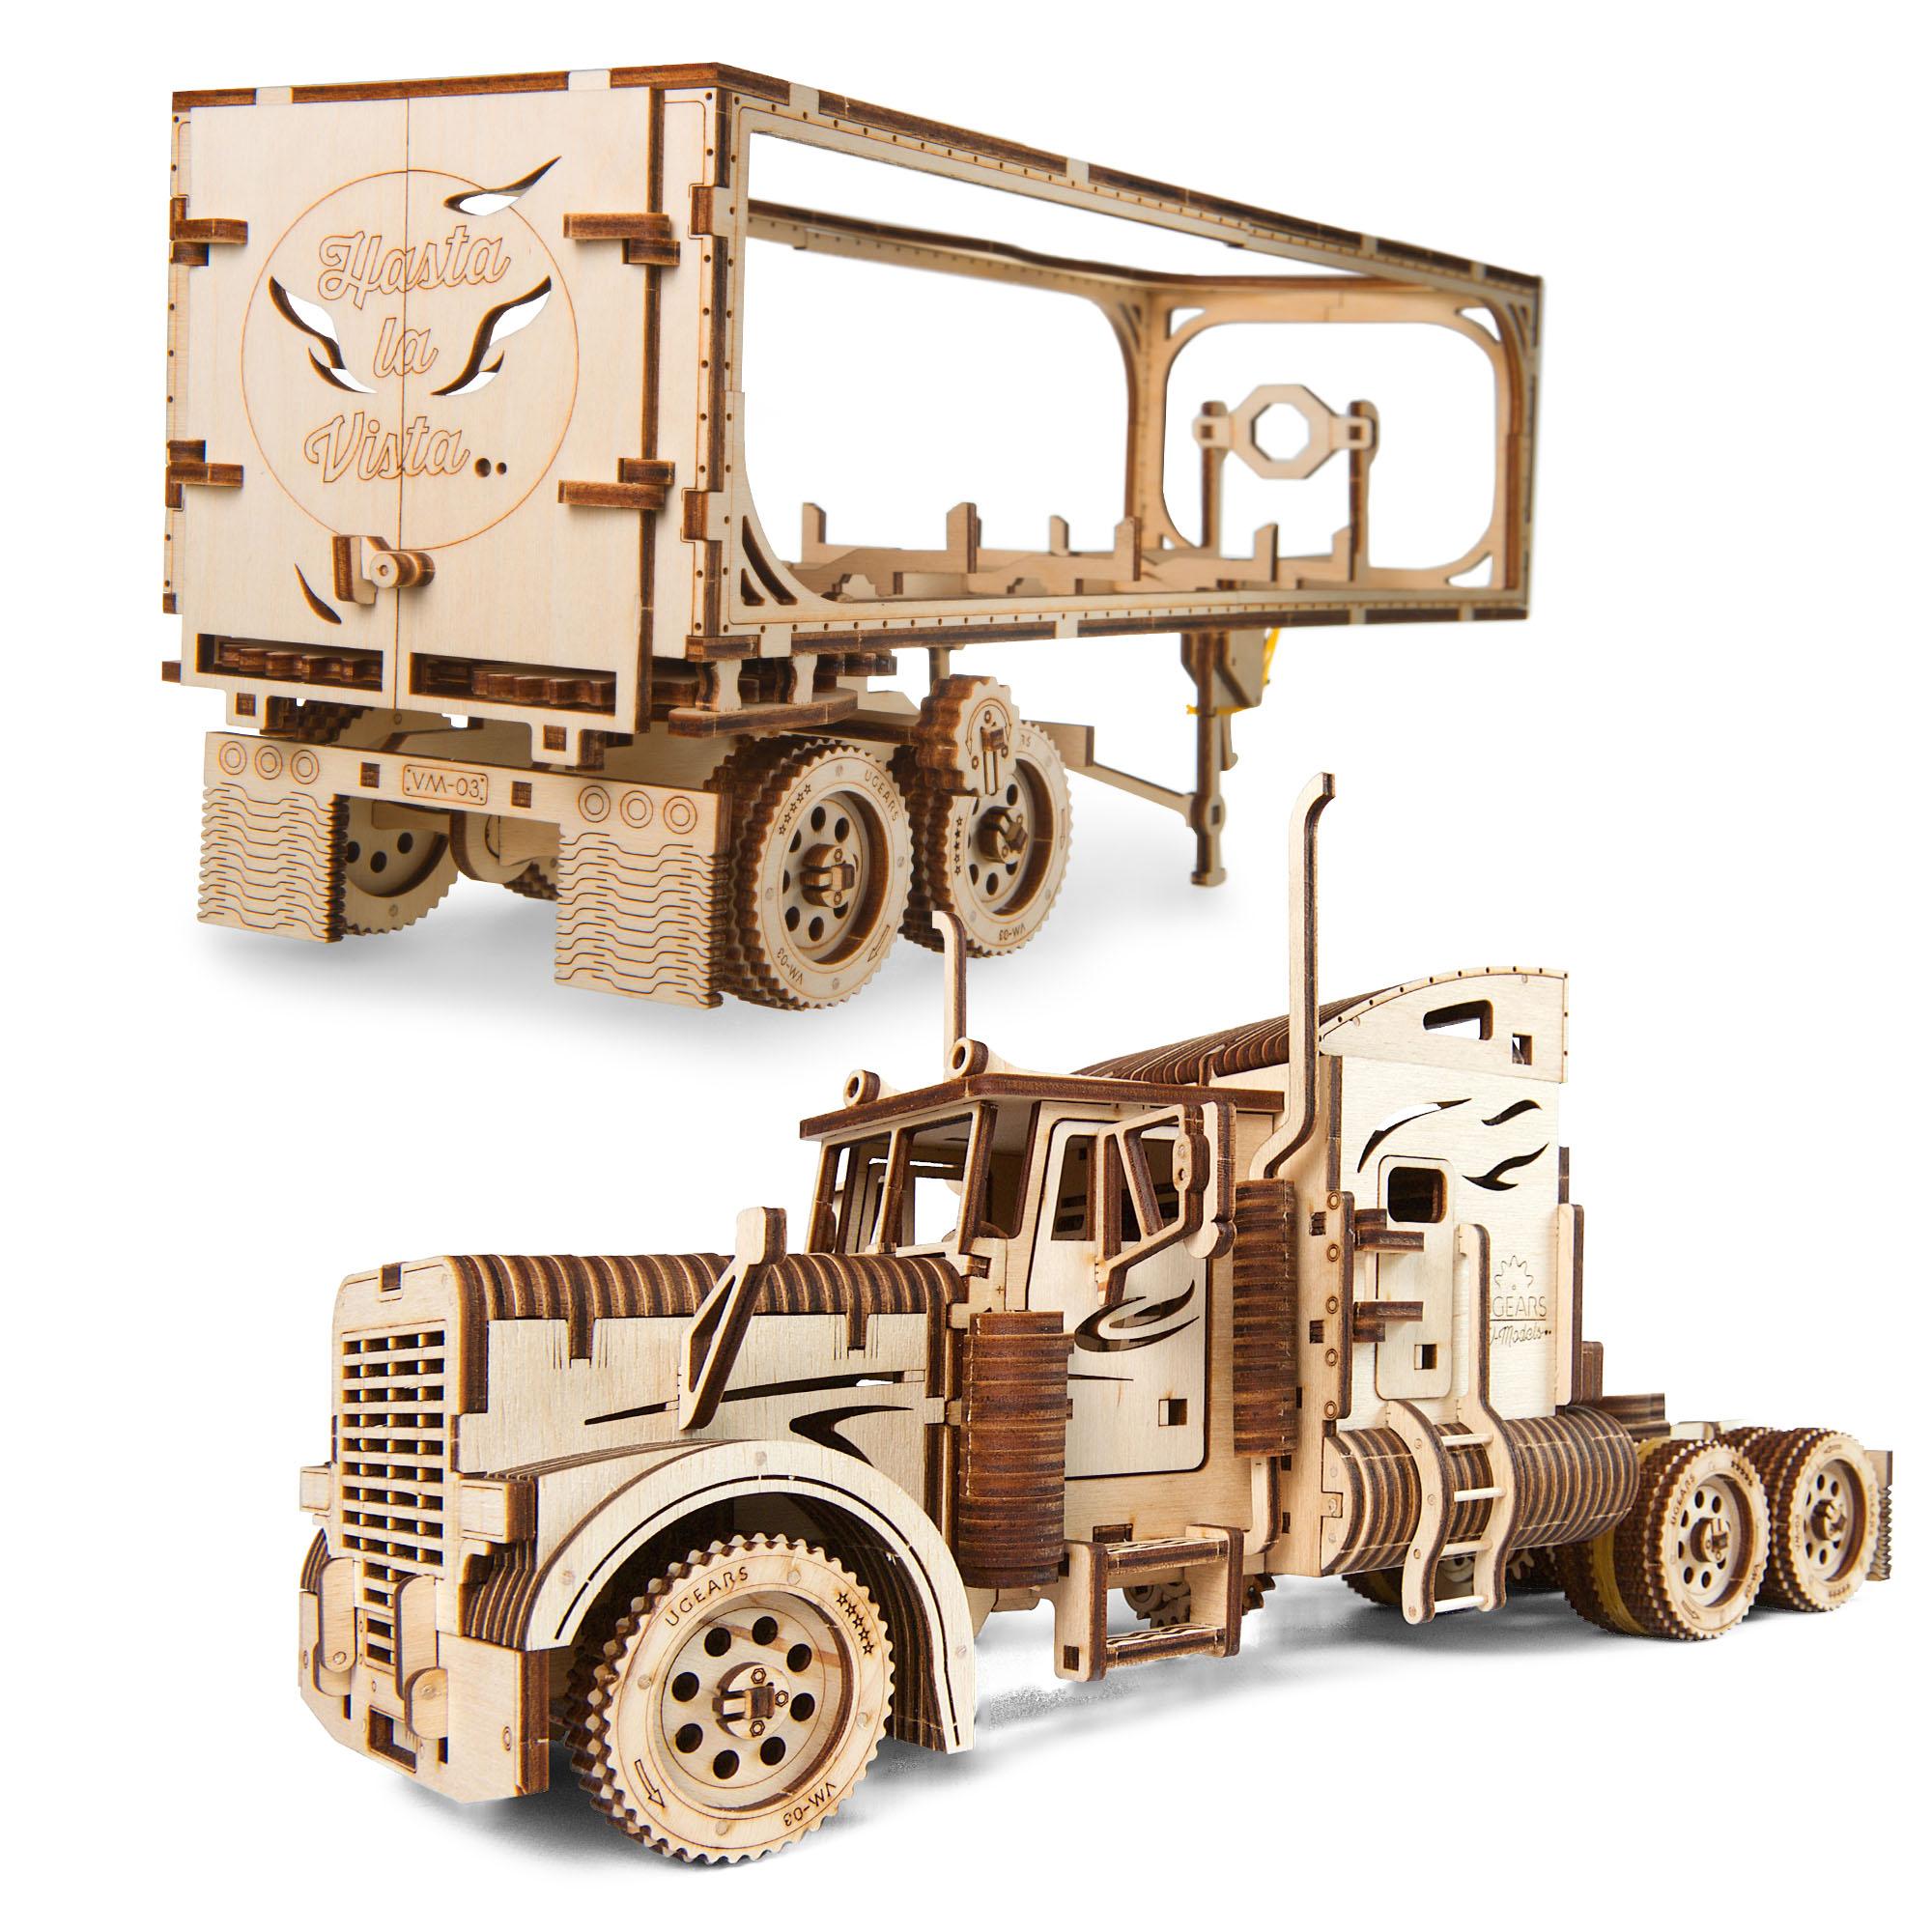 Ugears camiones Truck camiones heavy Boy vm-03 madera modelo vehículo modelo Kit 